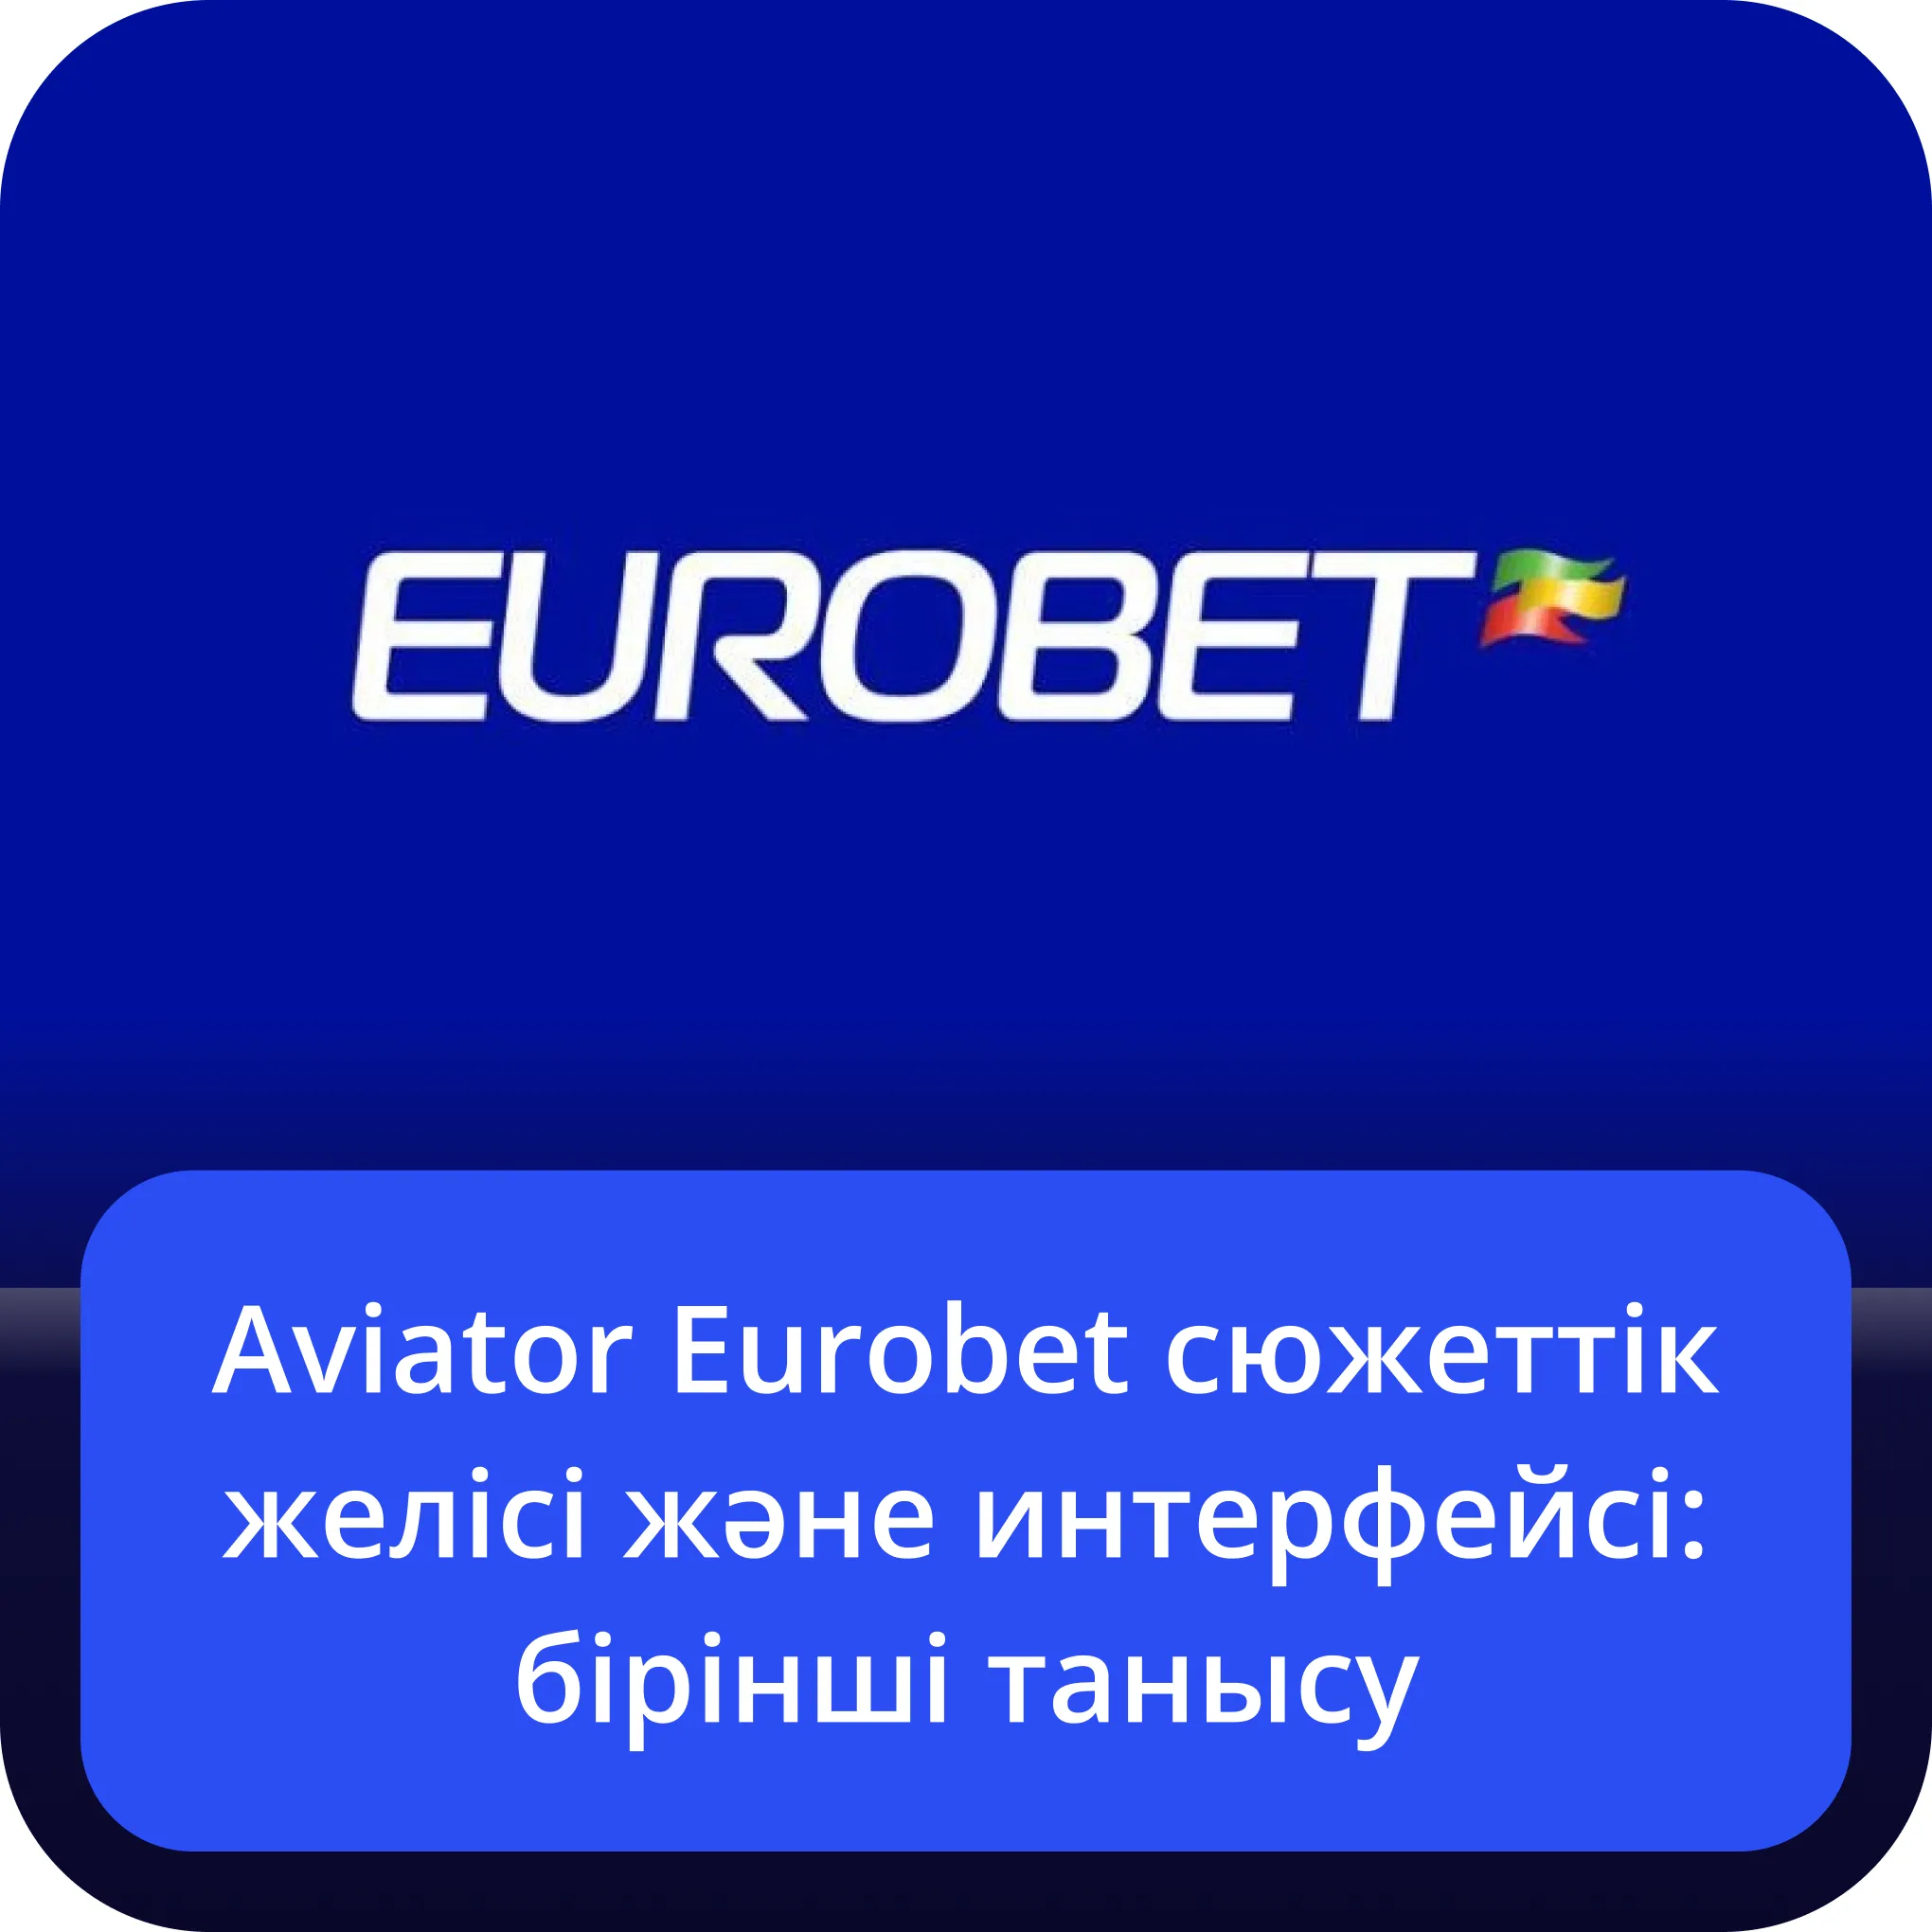 eurobet aviator сюжеттік